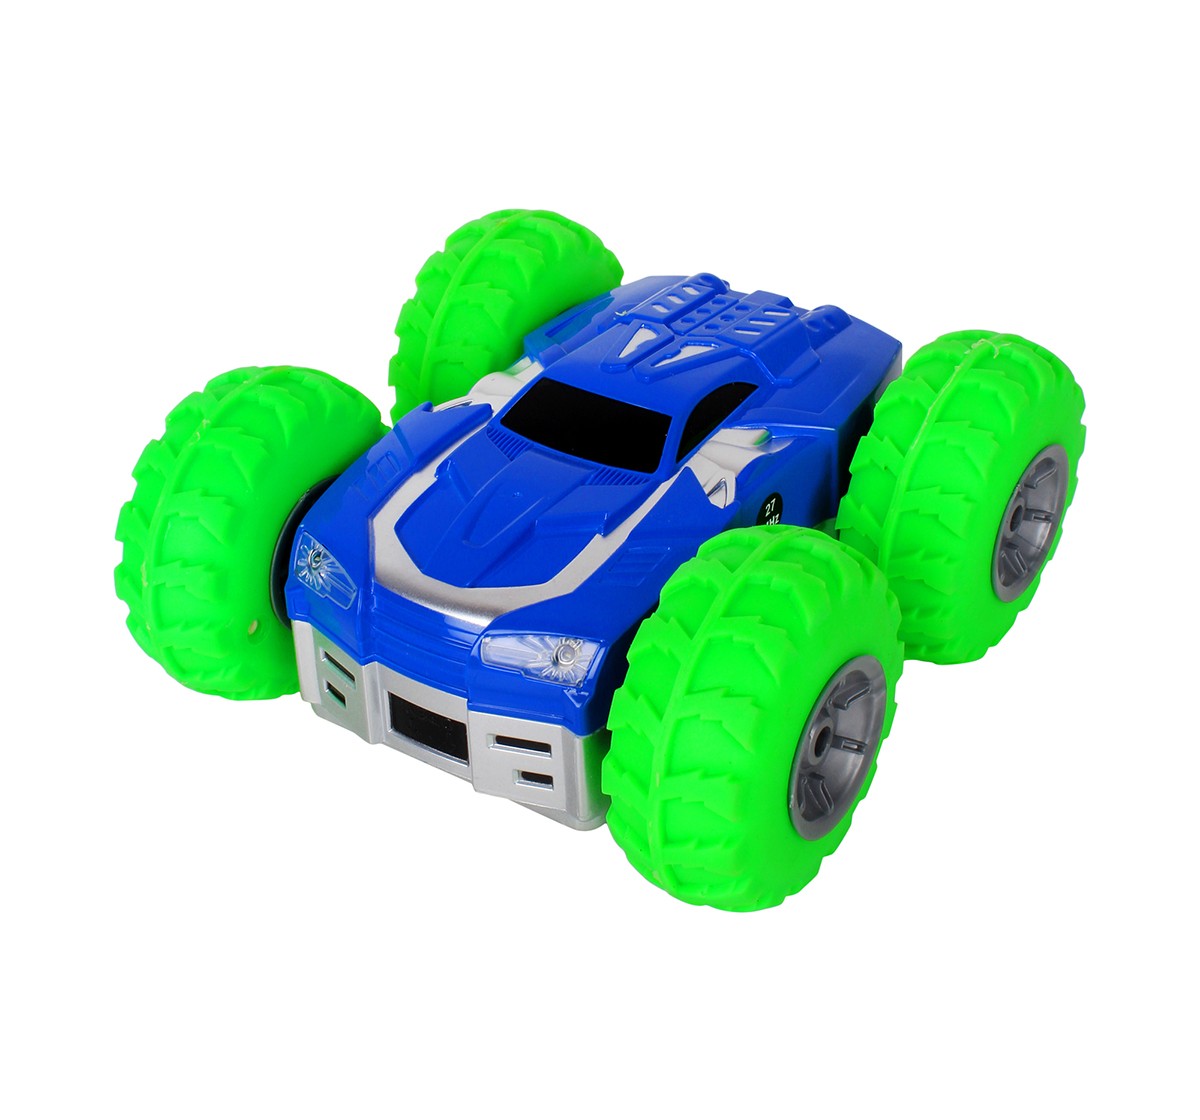 Yinrun Karmax Double Side Tornado- Radio Control Remote Control Toys for Kids age 6Y+ 